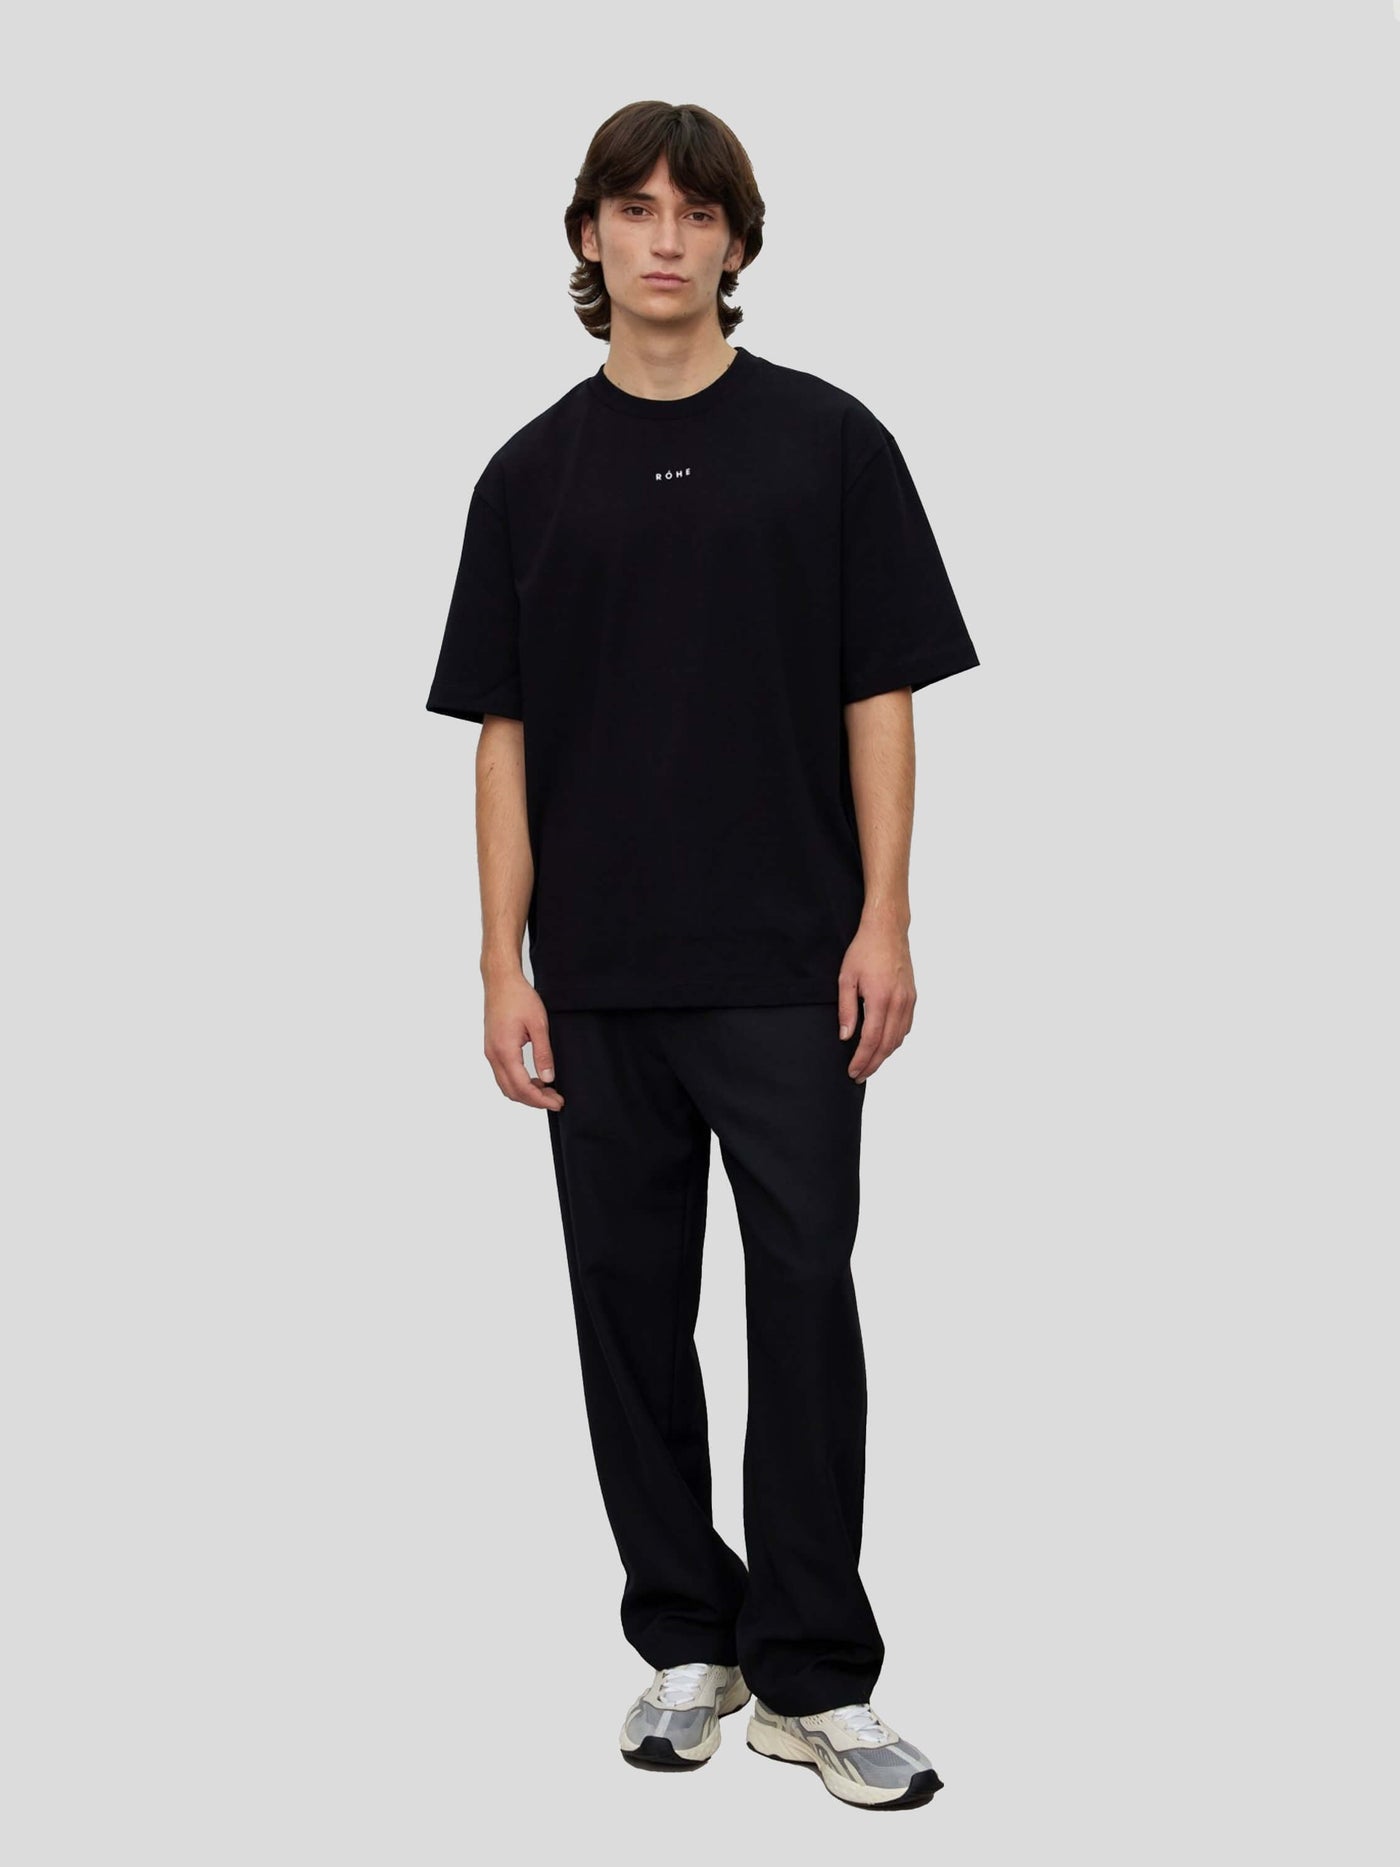 RÓHE Shirts & Polos | T-Shirt FREYE in schwarz | 301-22-024-138 noir / ADAM/EVE